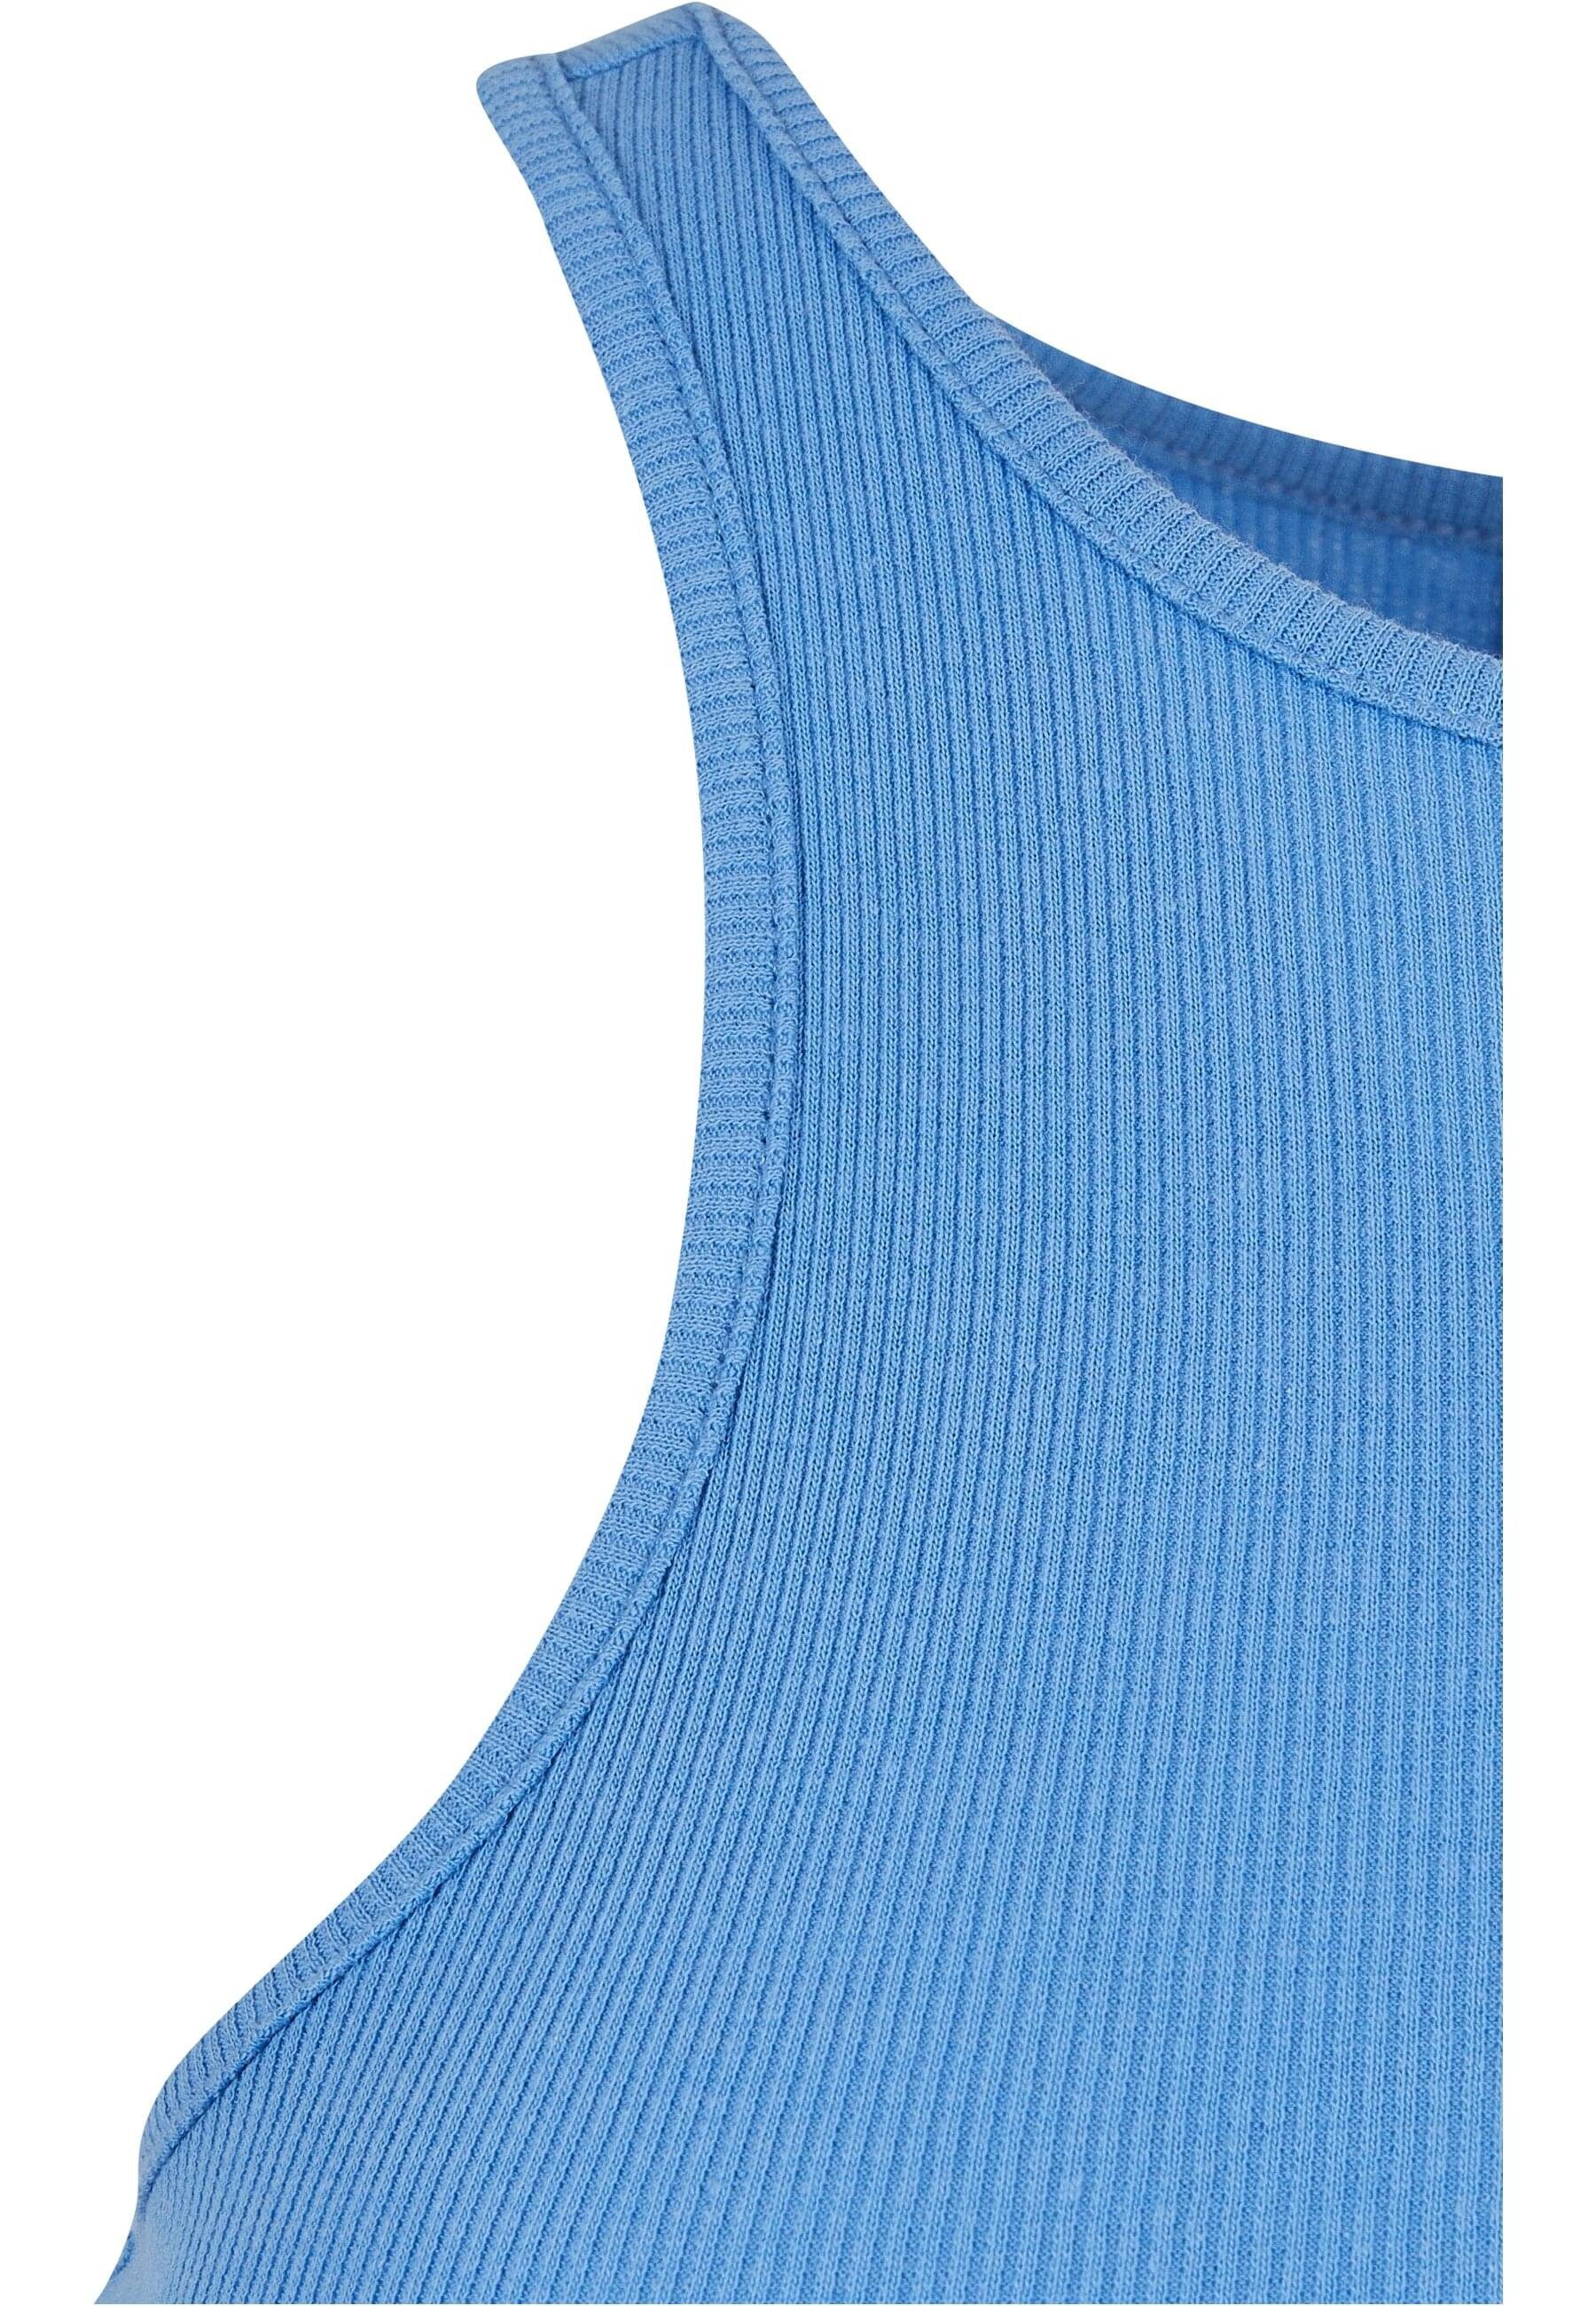 URBAN CLASSICS horizonblue (1-tlg) Cropped T-Shirt Rib Ladies Damen Top